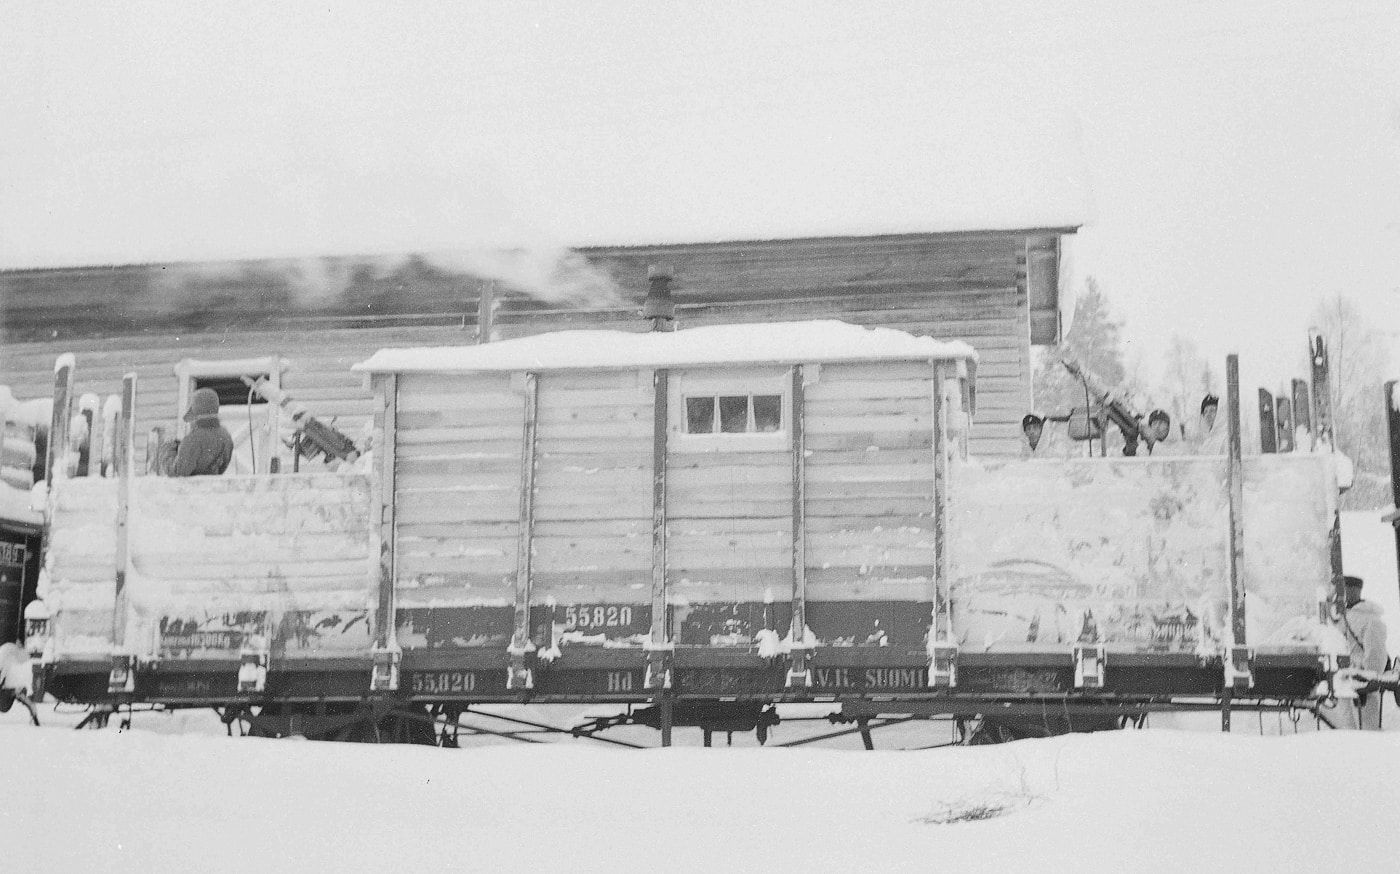 Finnish M09-21 Maxim machine guns mounted in a train for AA work